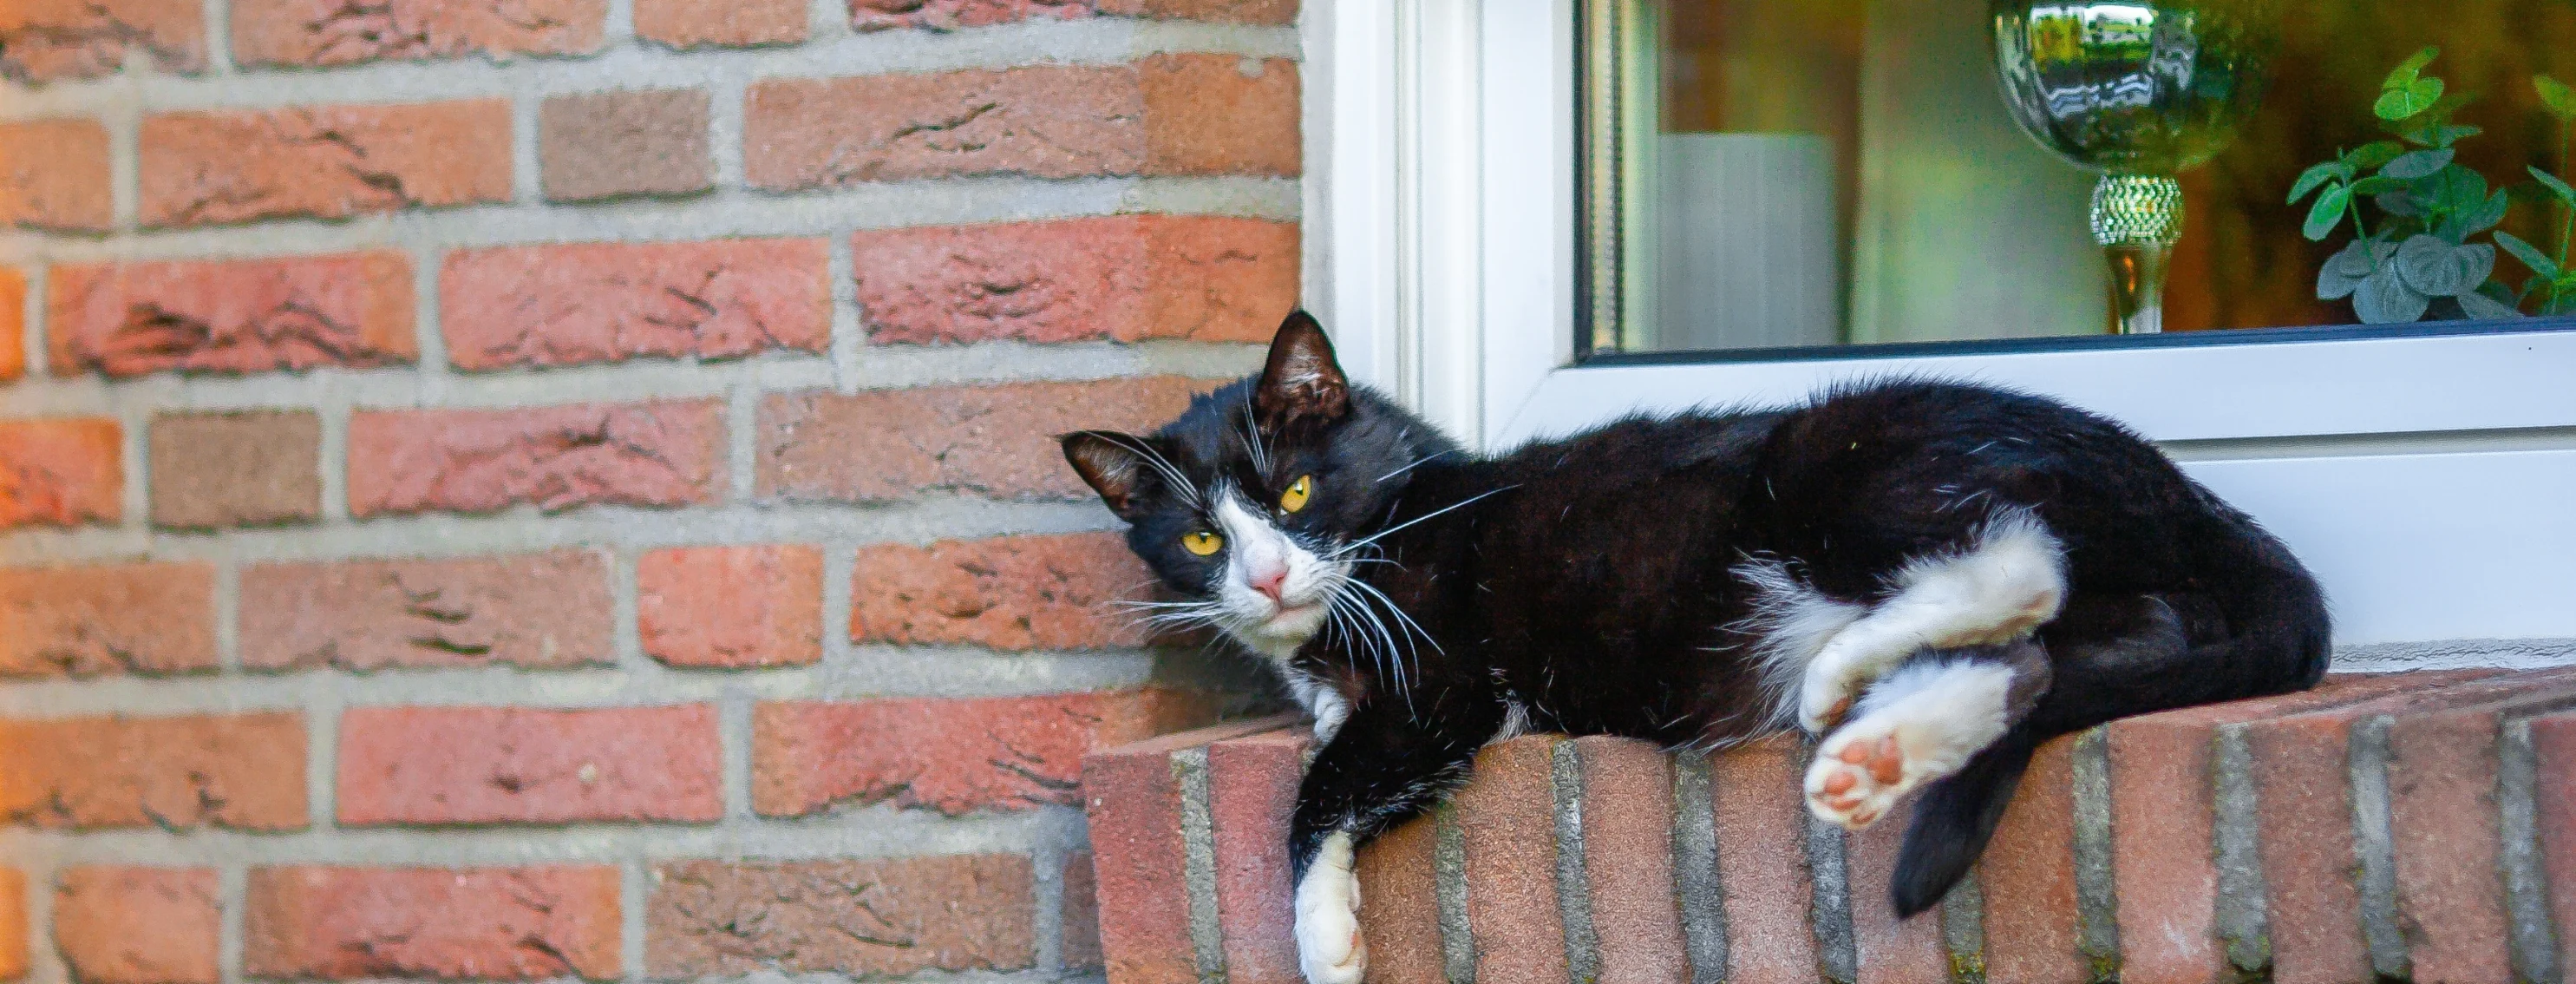 Black cat on a brick window